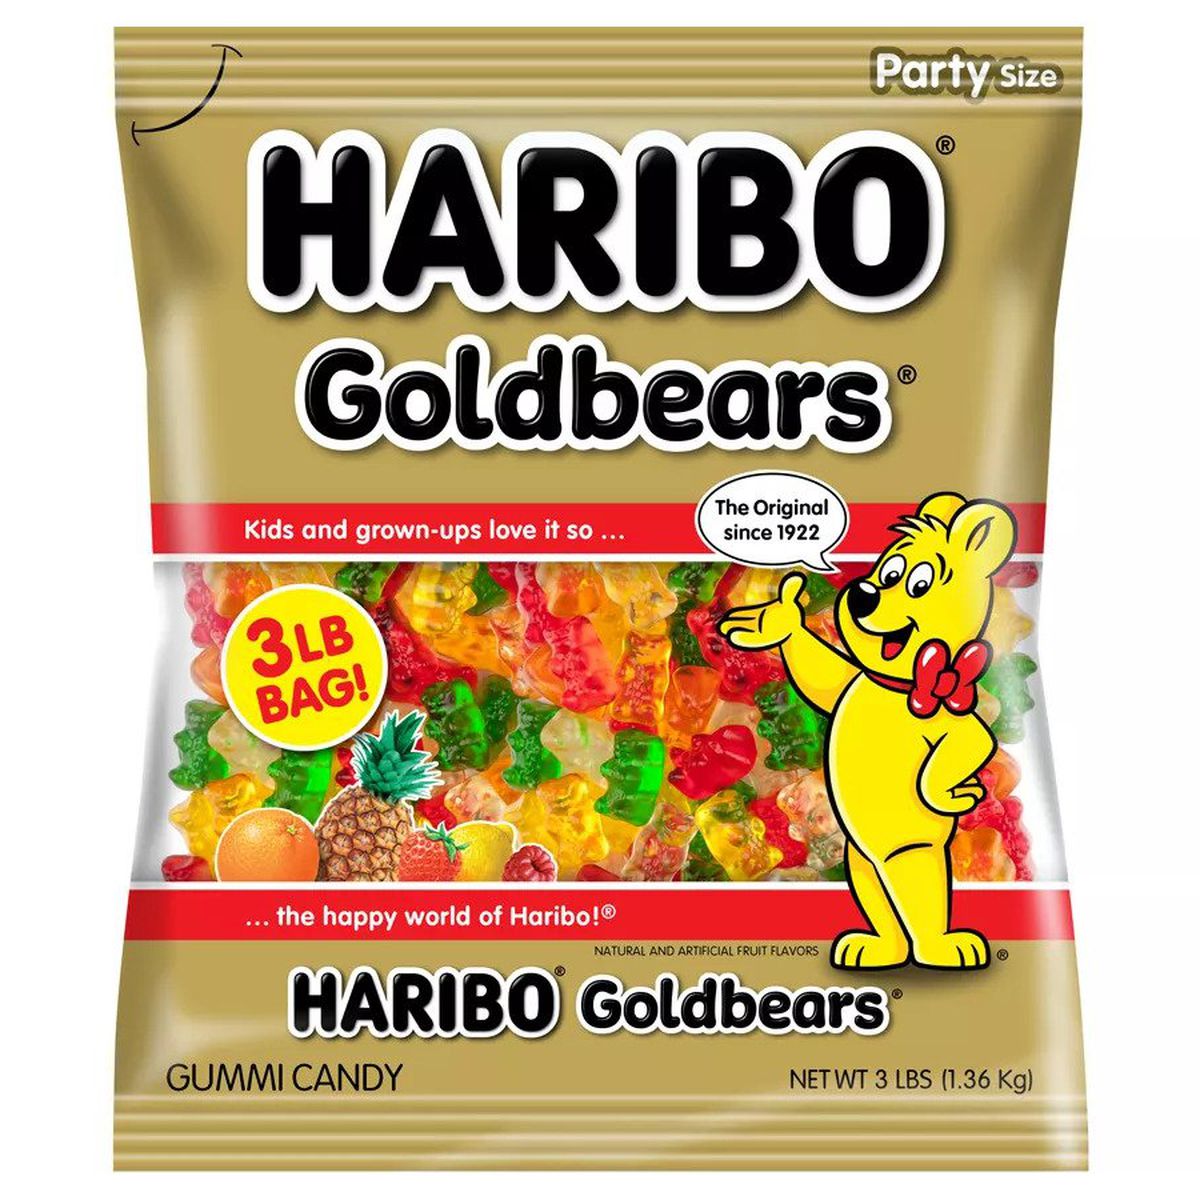 A bag of Haribo gummi bears